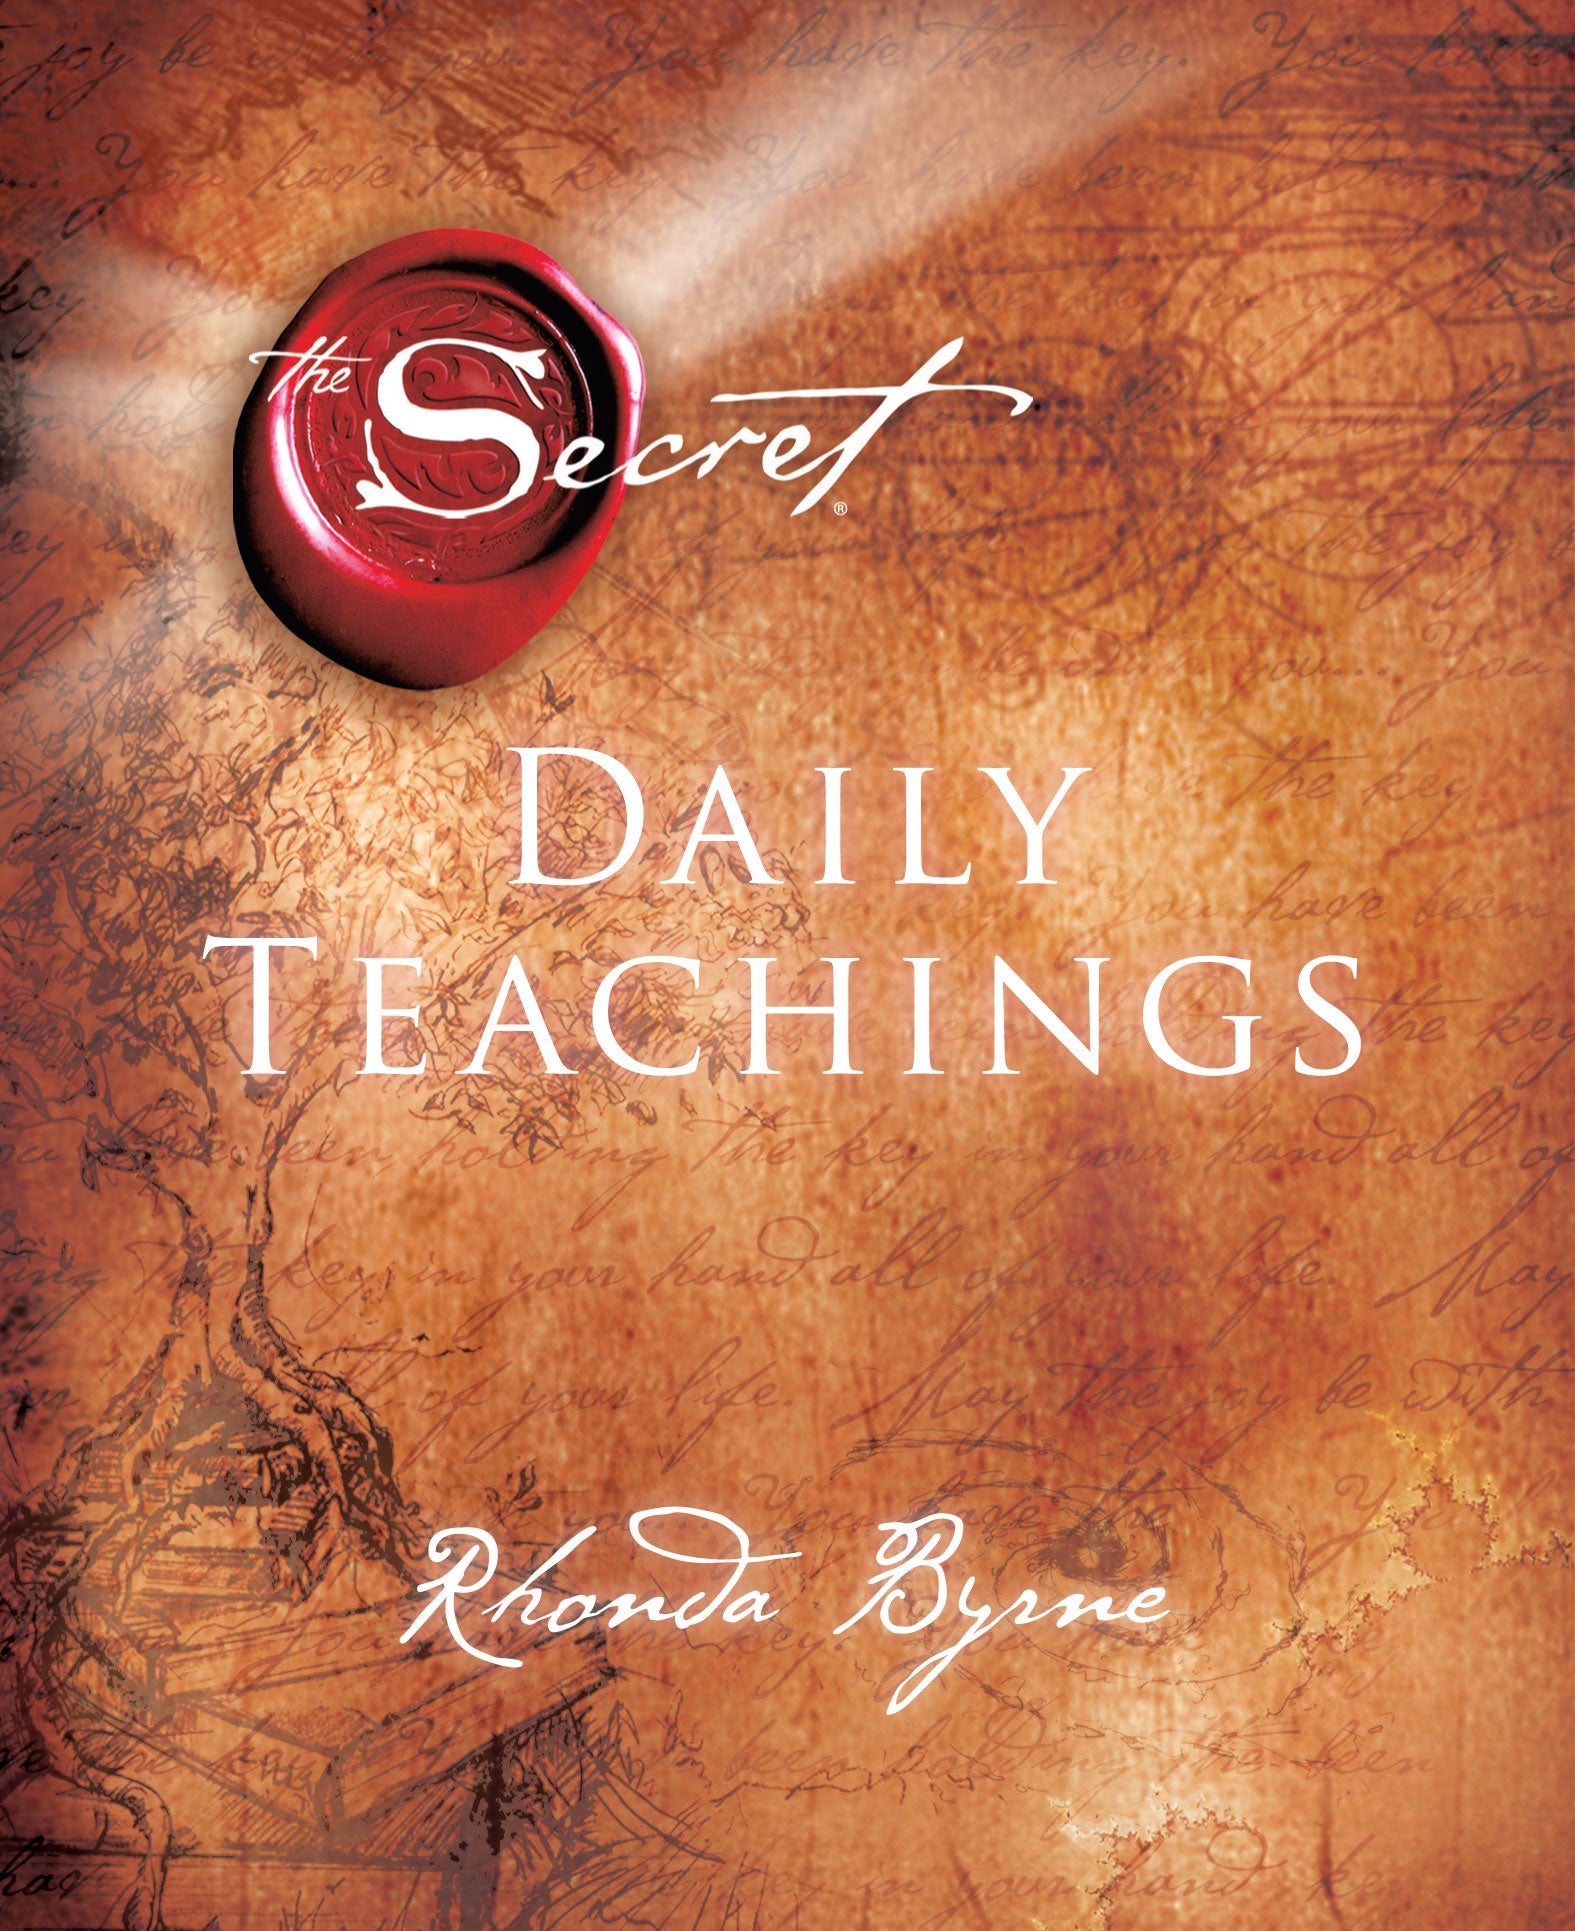 The Secret: Daily Teachings by Rhonda Byrne